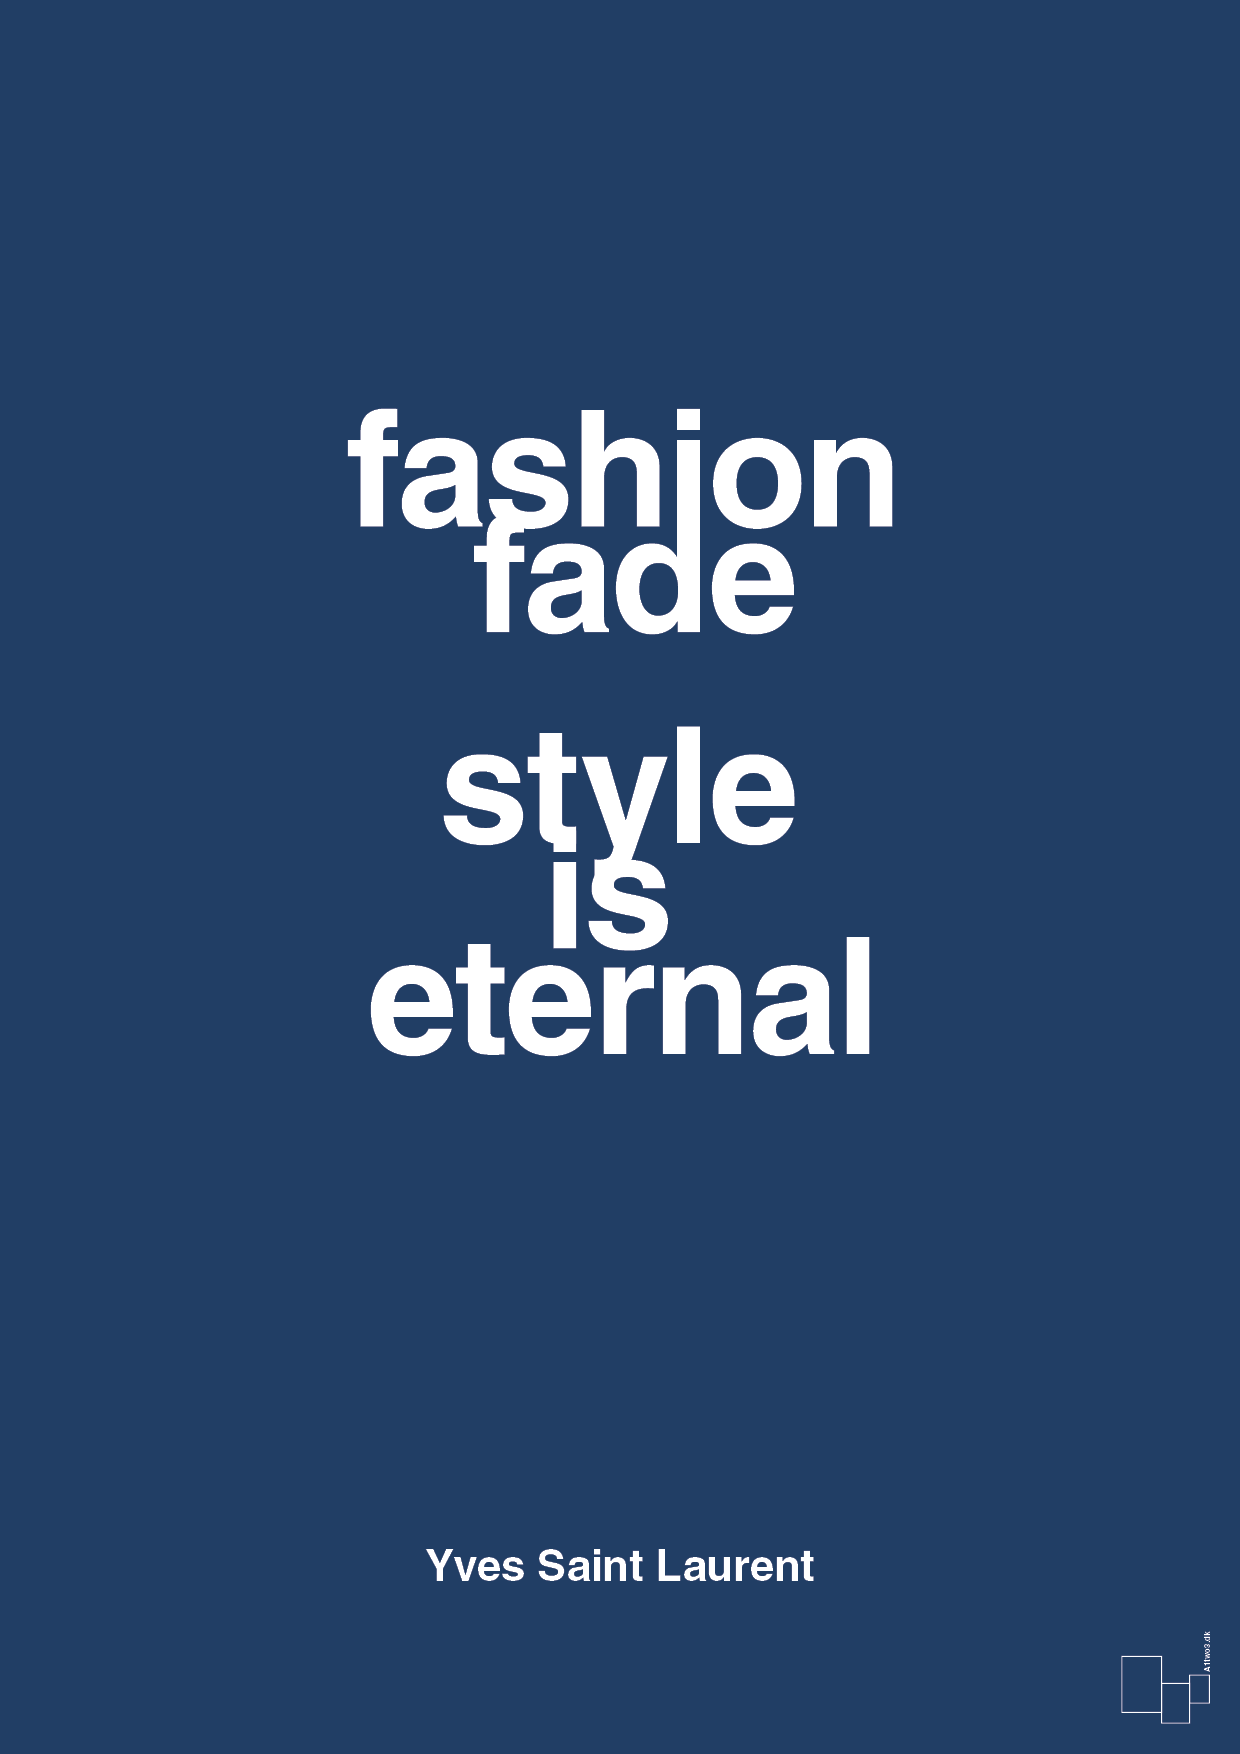 plakat: fashion fade style is eternal